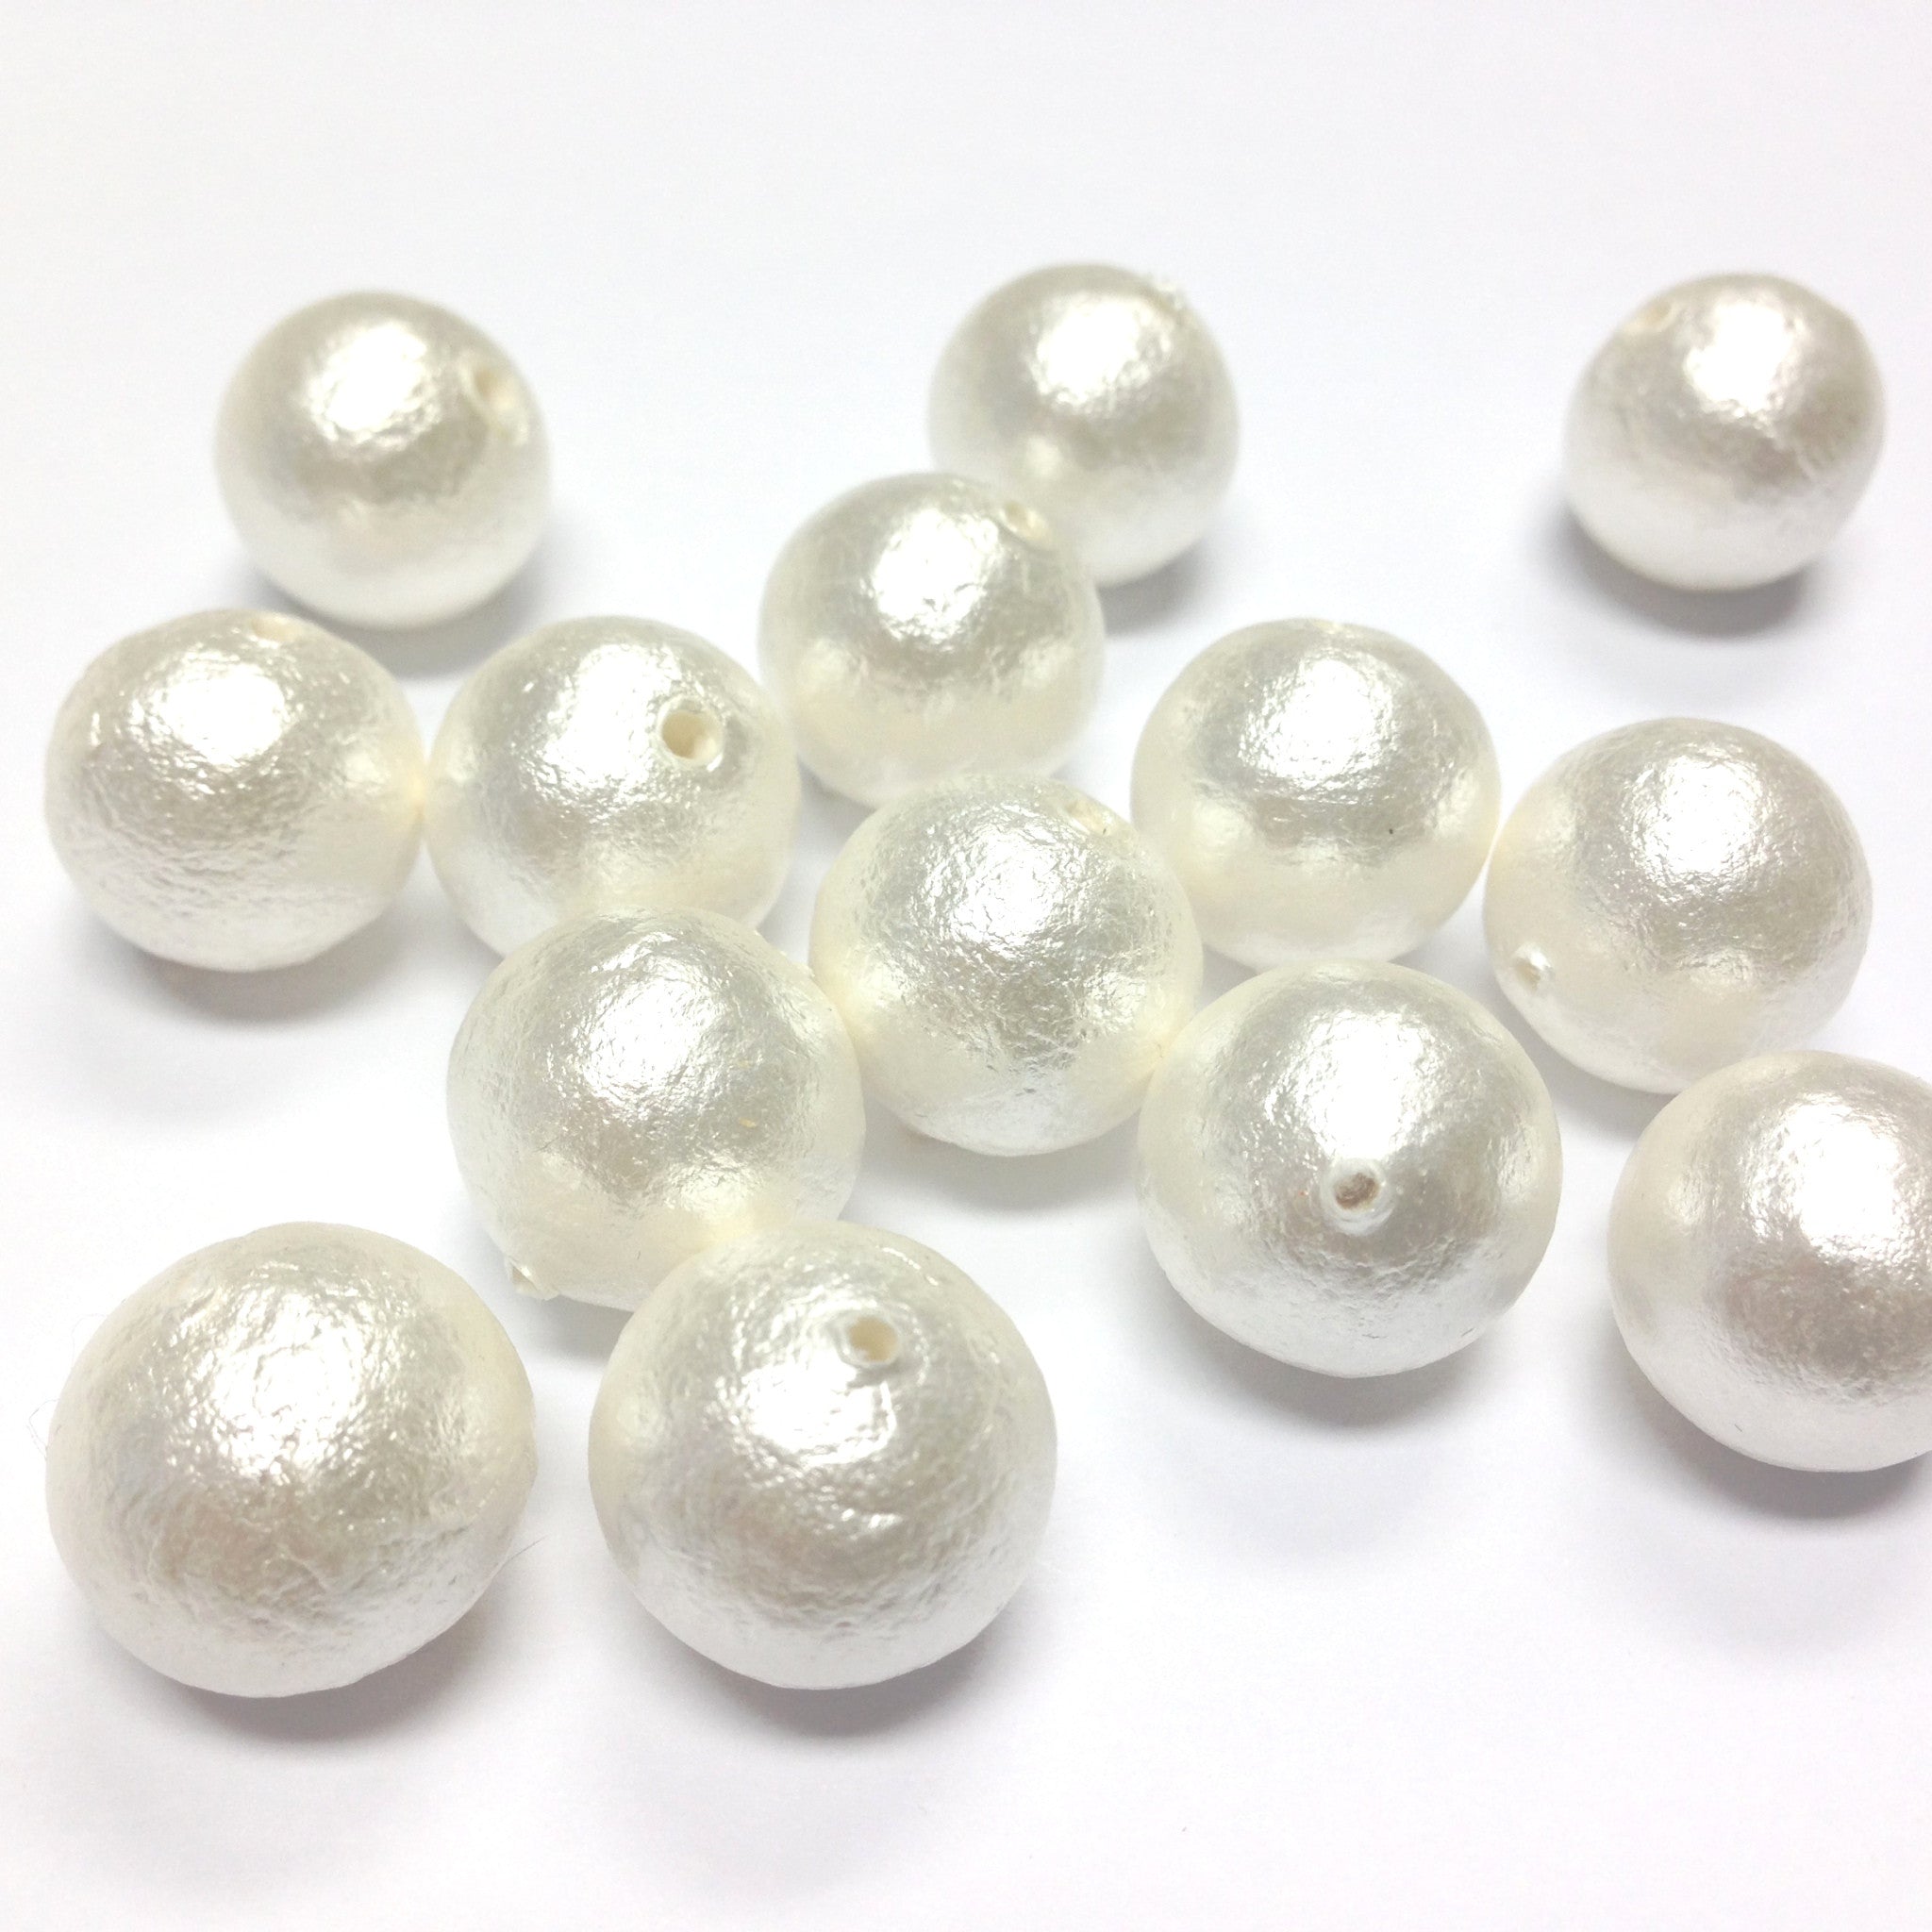 Pearl Cotton Balls - Size 8 - White - (116-8-WHT)